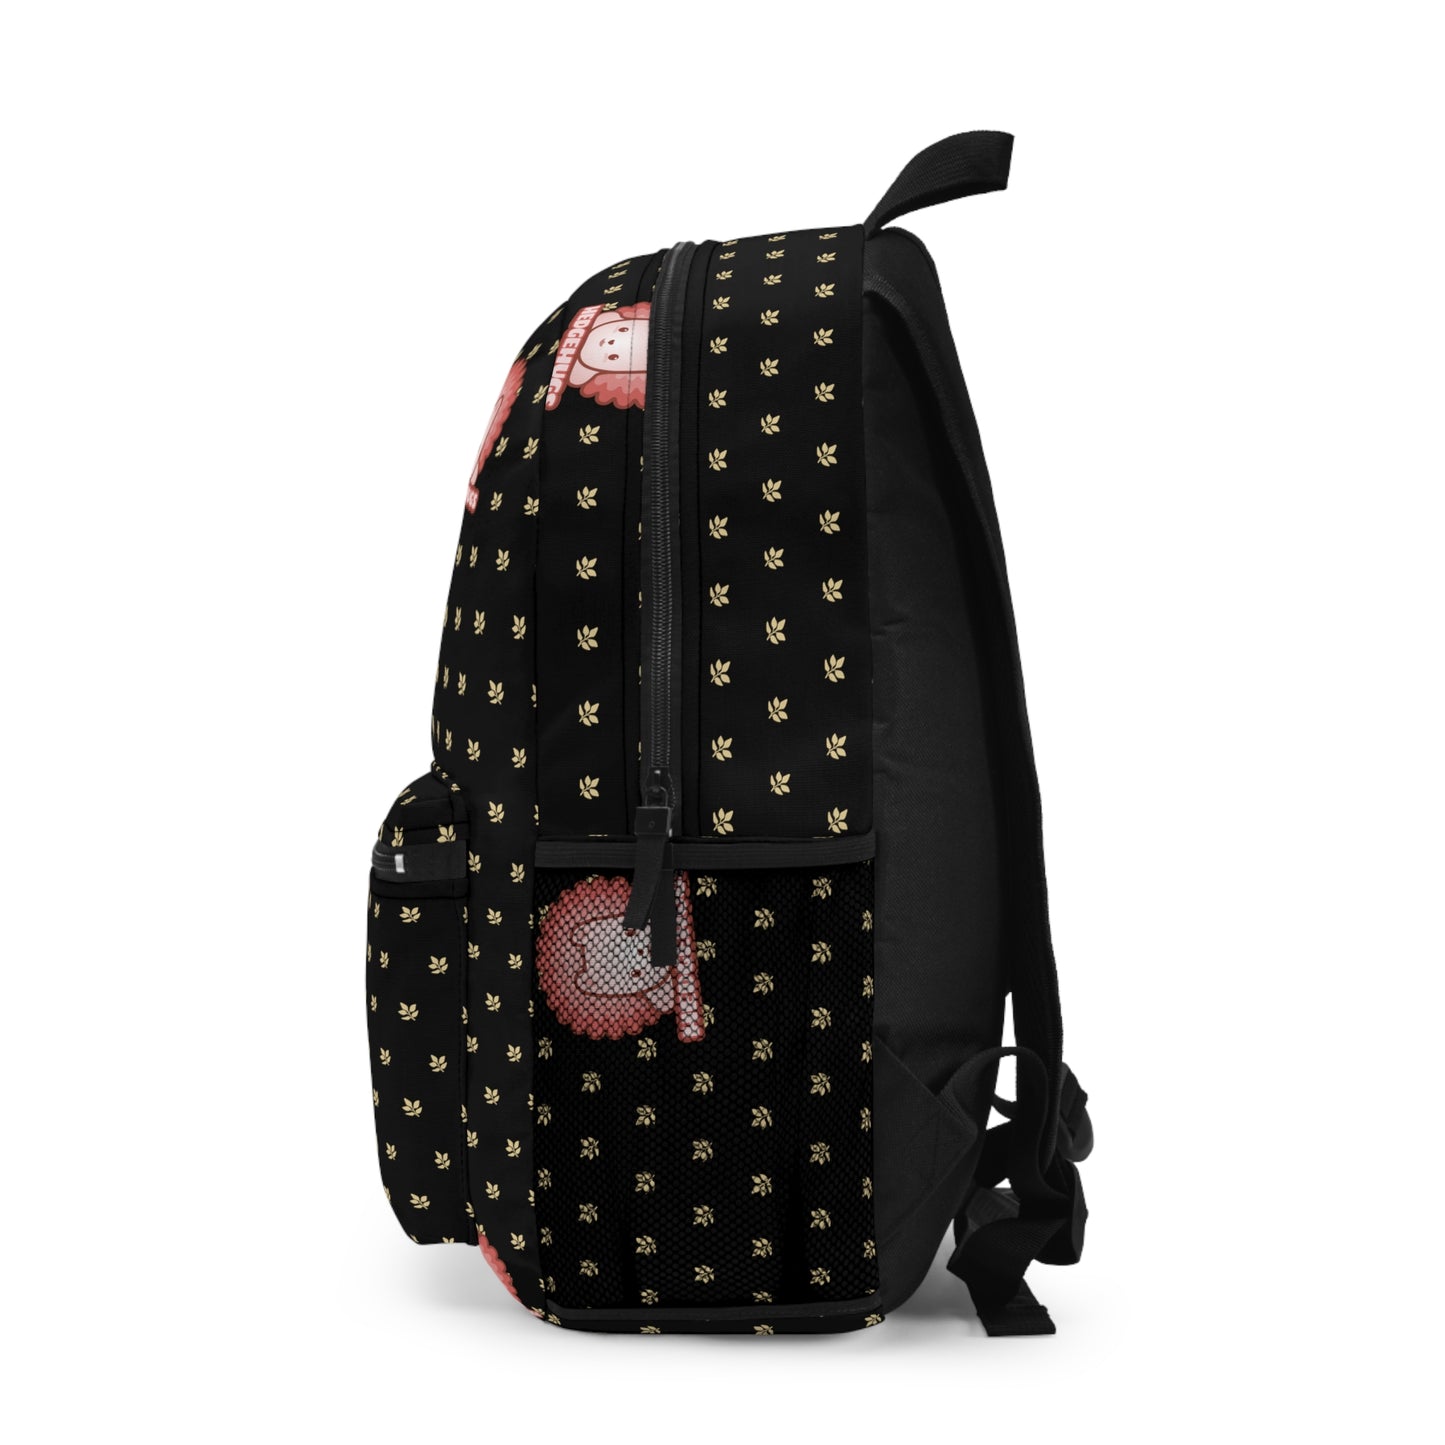 Cute Hedgehog Backpack - “Hedgehugs” by Small and Simple Things